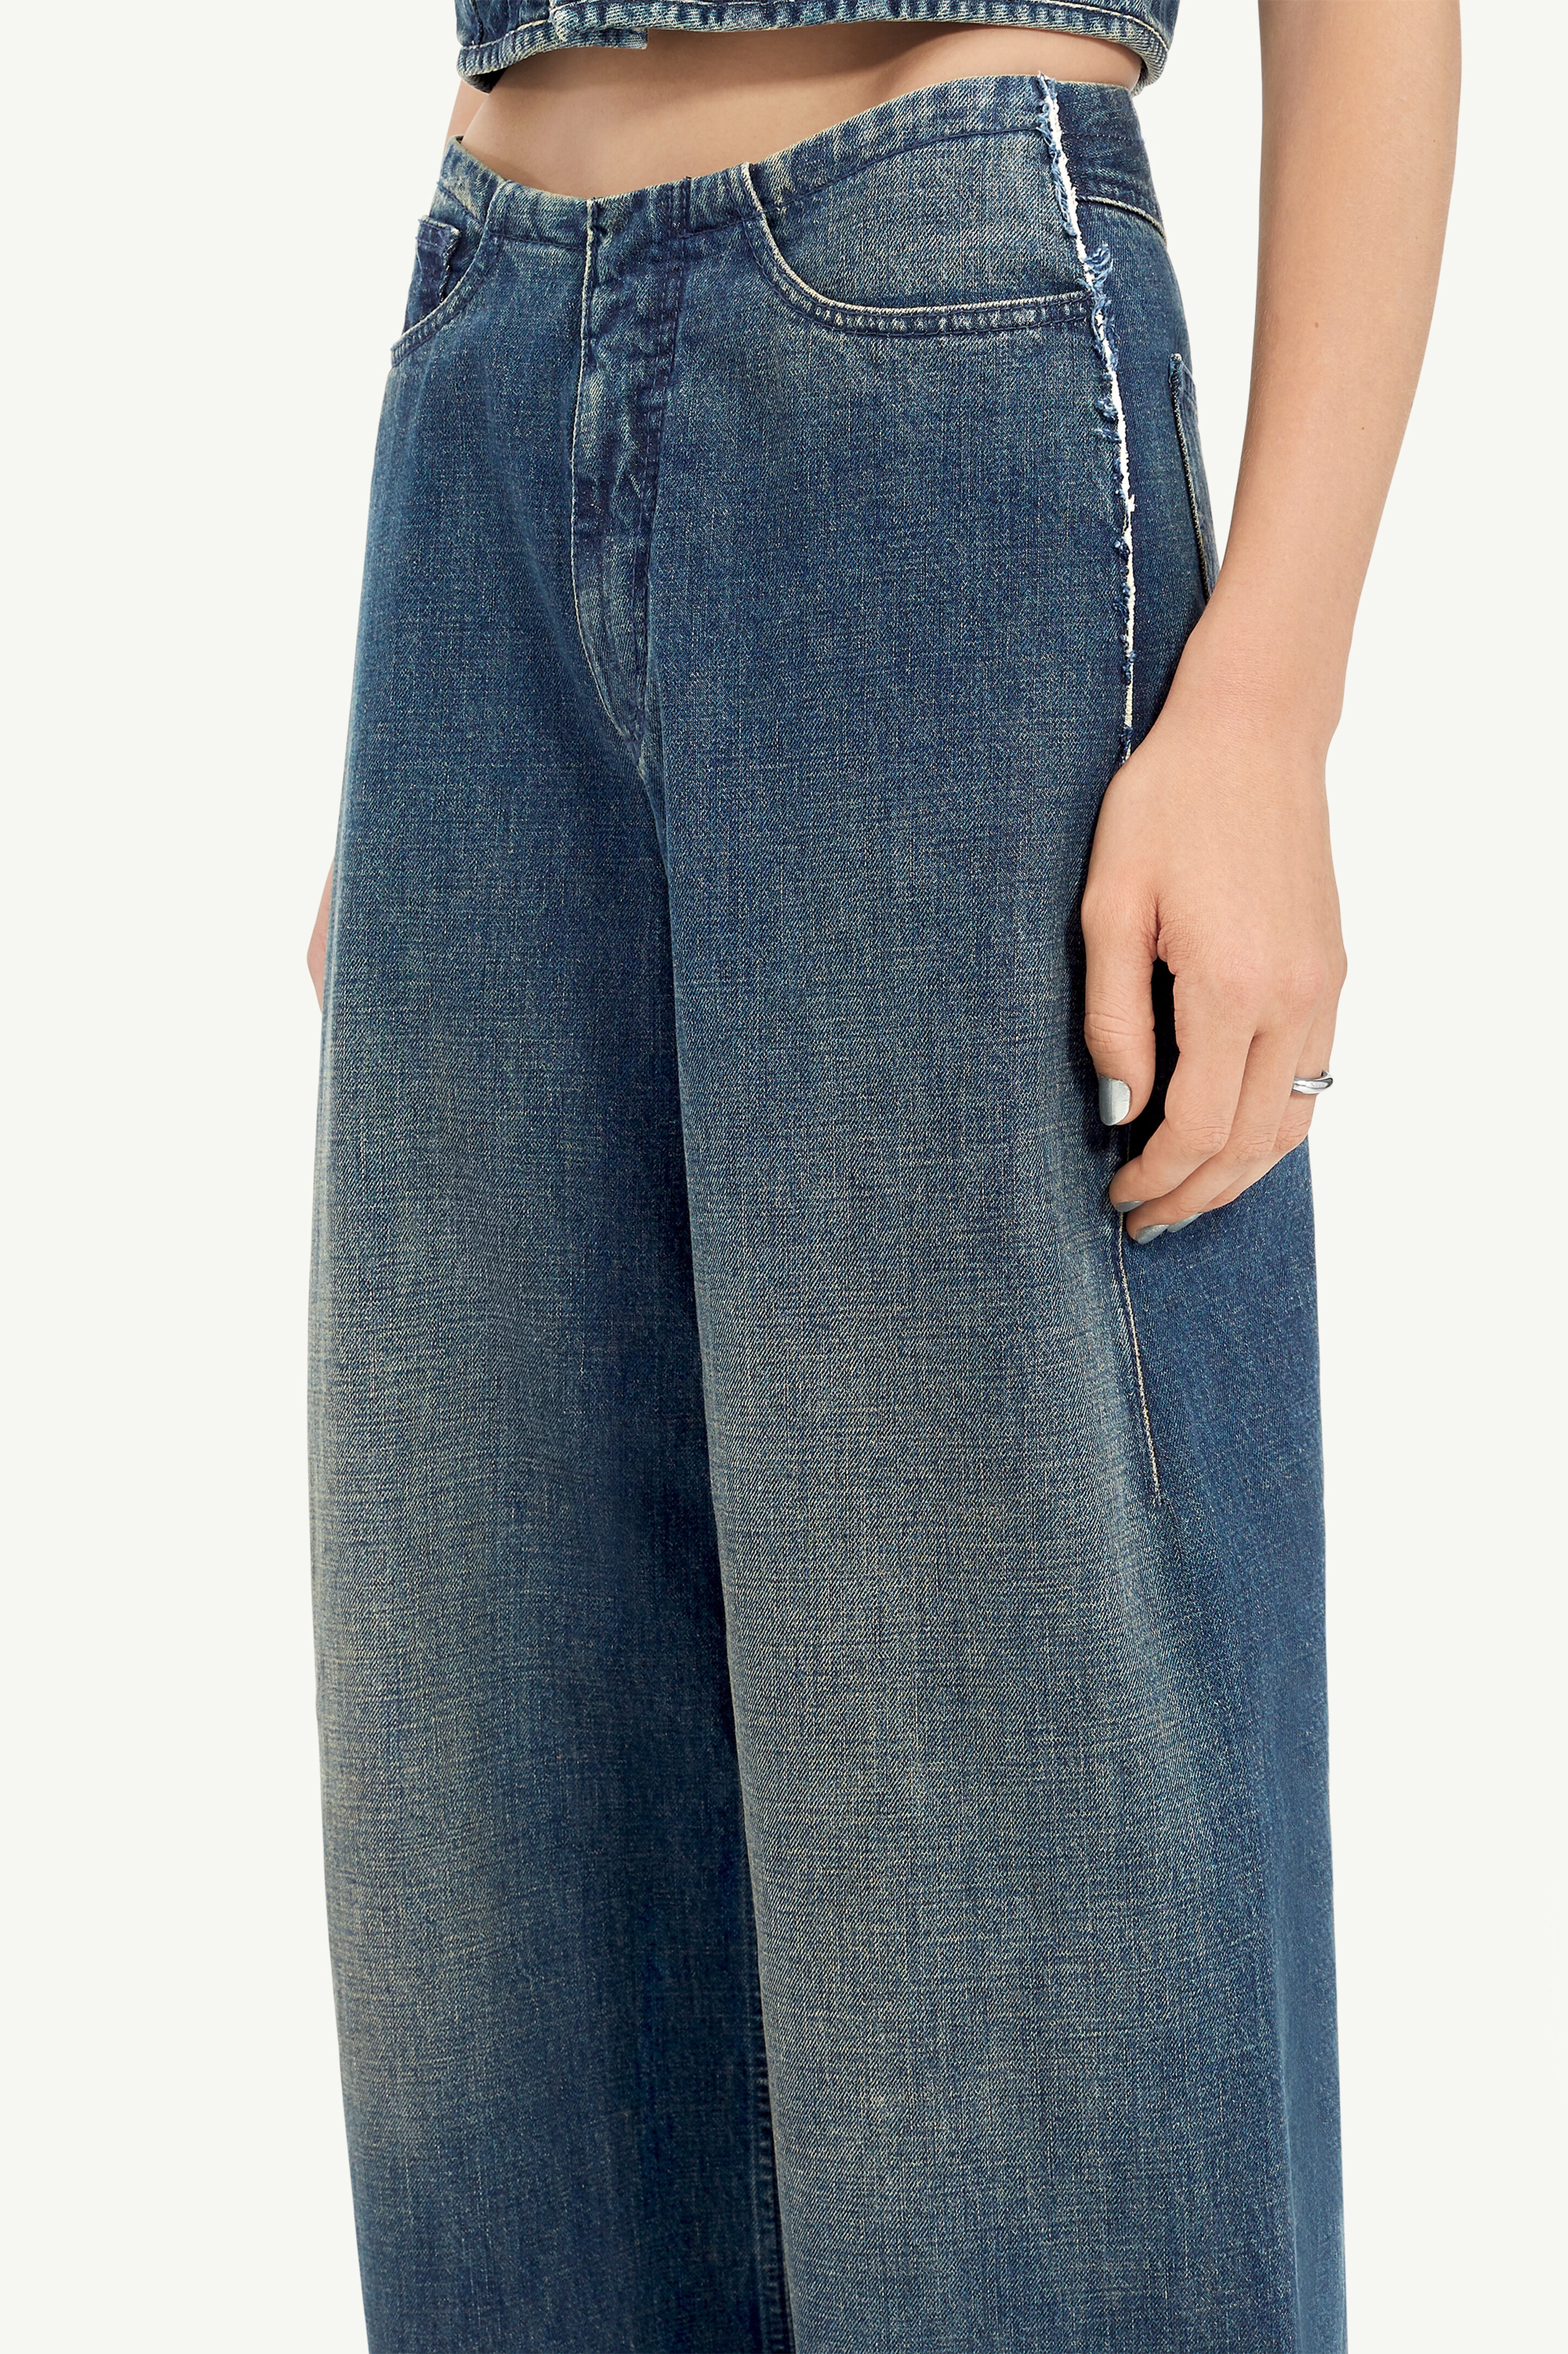 MM6 Maison Margiela Blue-Denim 5-Pocket Trousers | REVERSIBLE